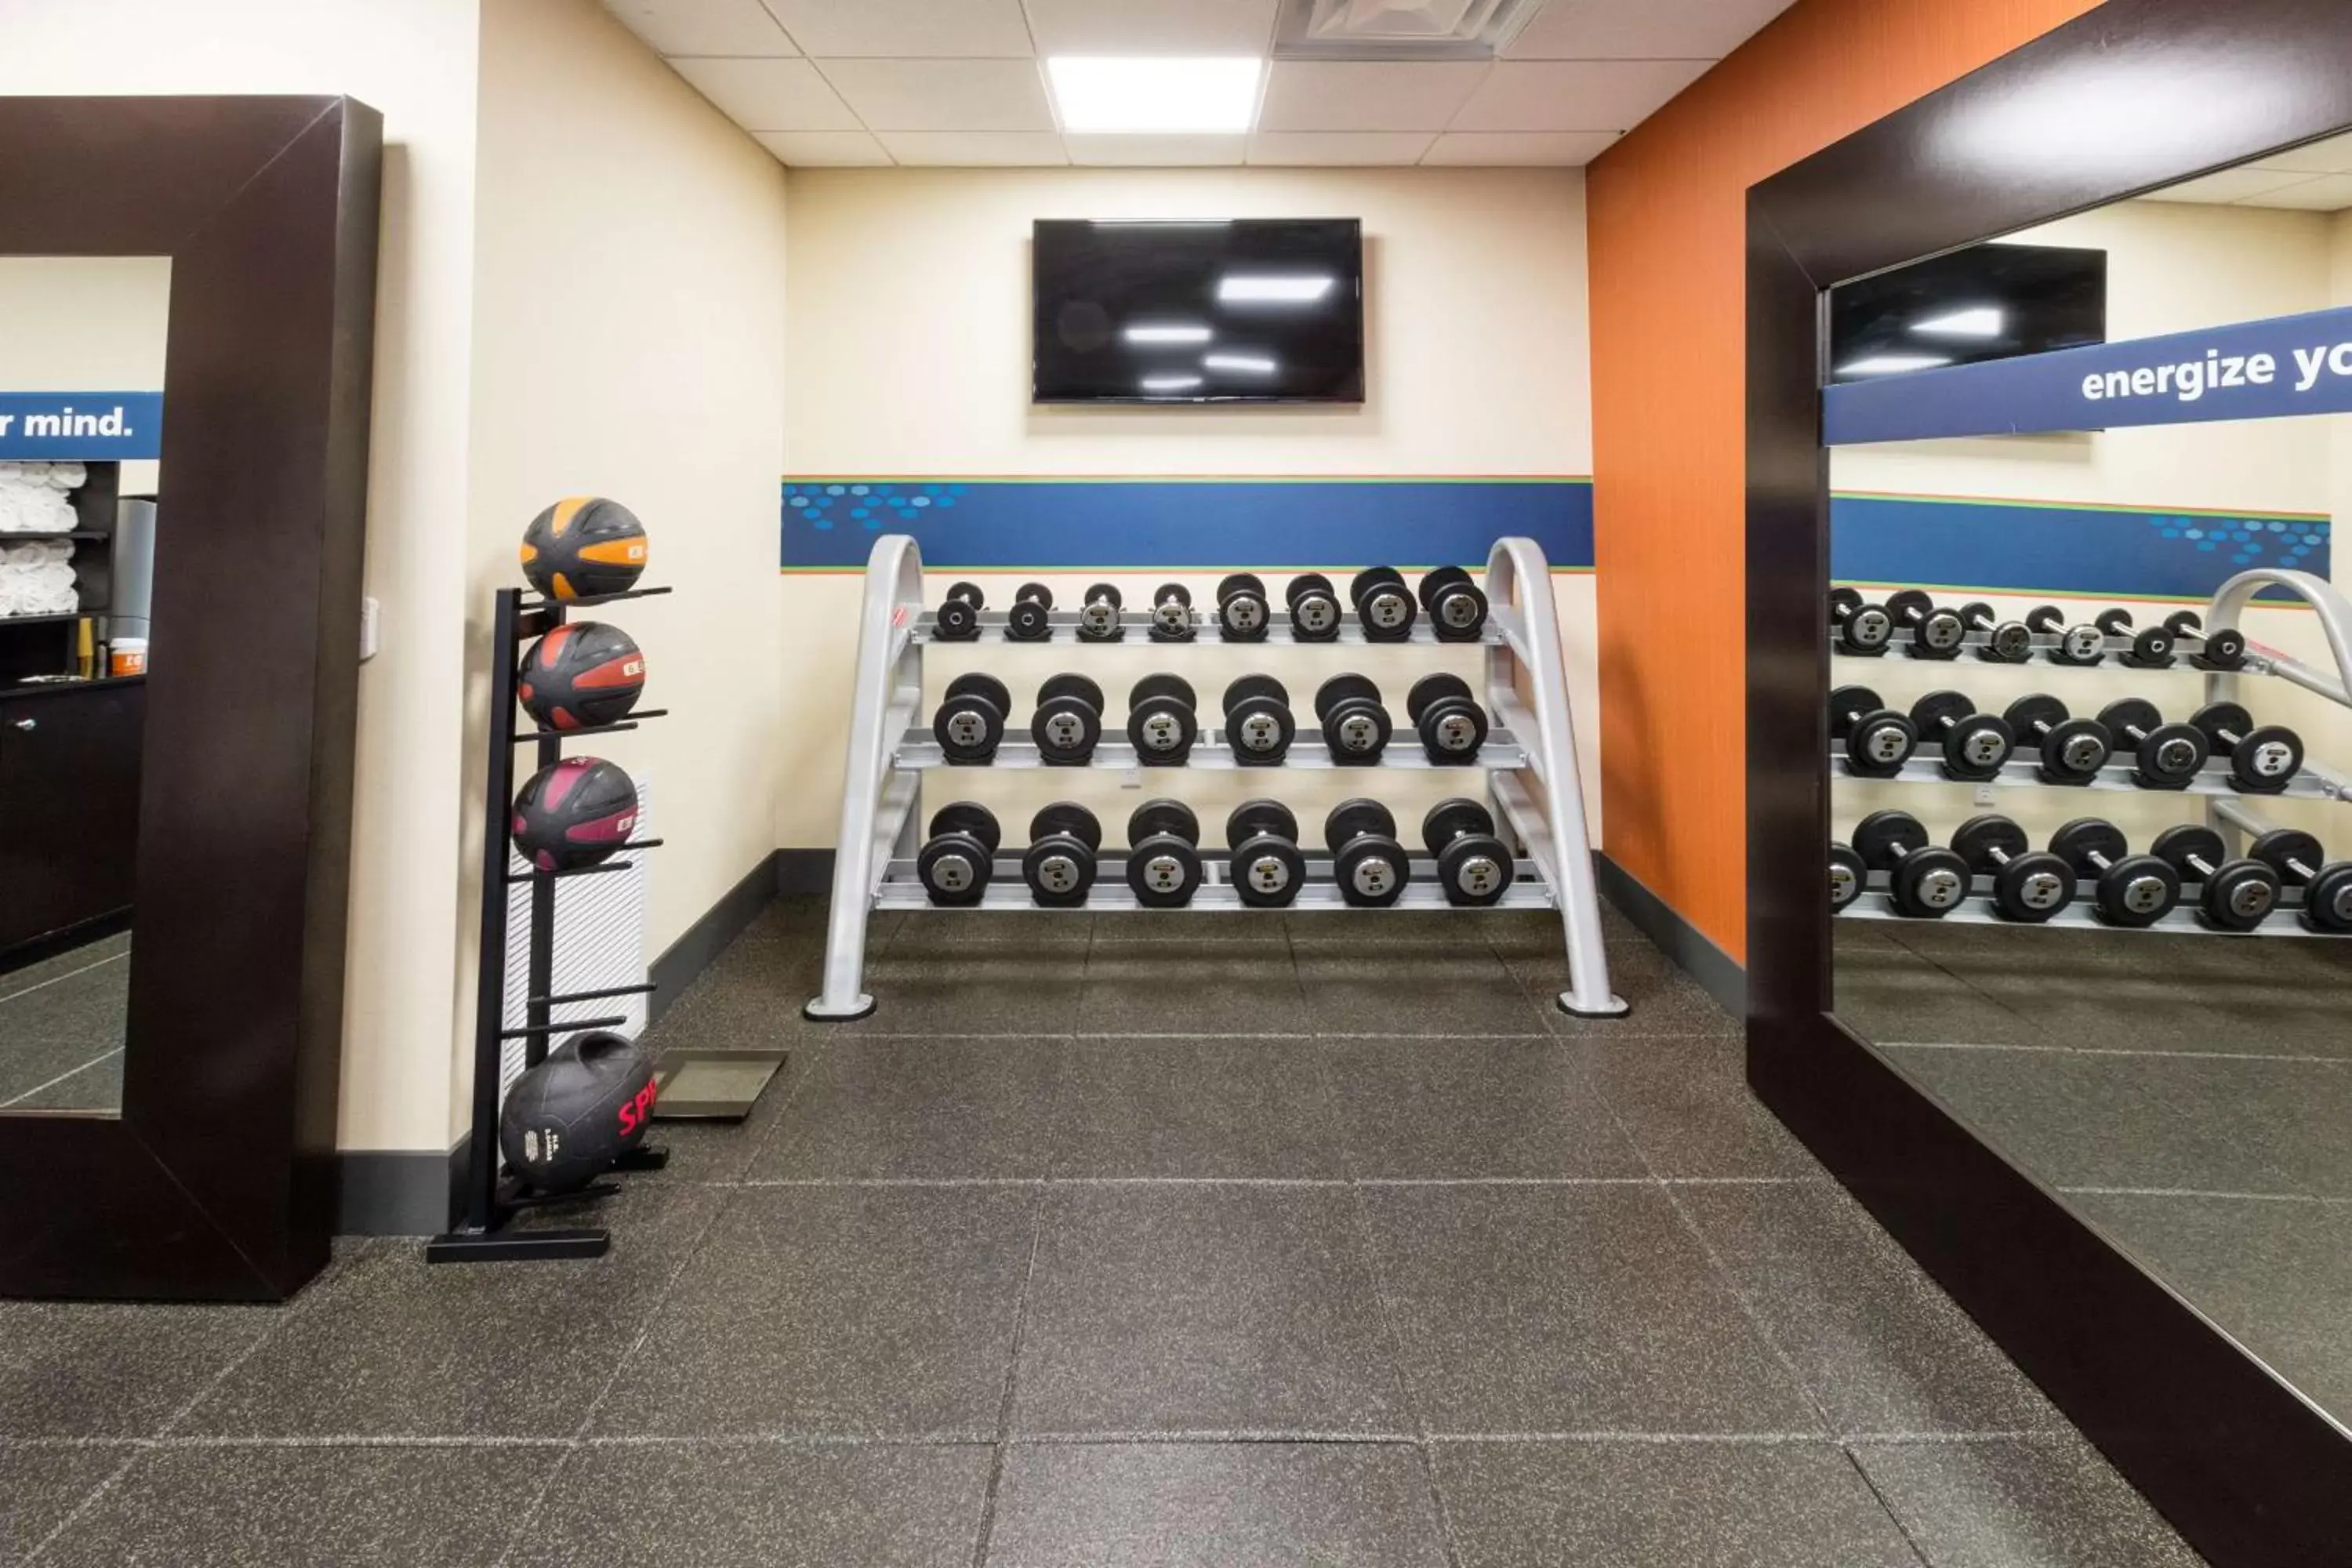 Fitness centre/facilities, Fitness Center/Facilities in Hampton Inn Daytona Beach/Beachfront